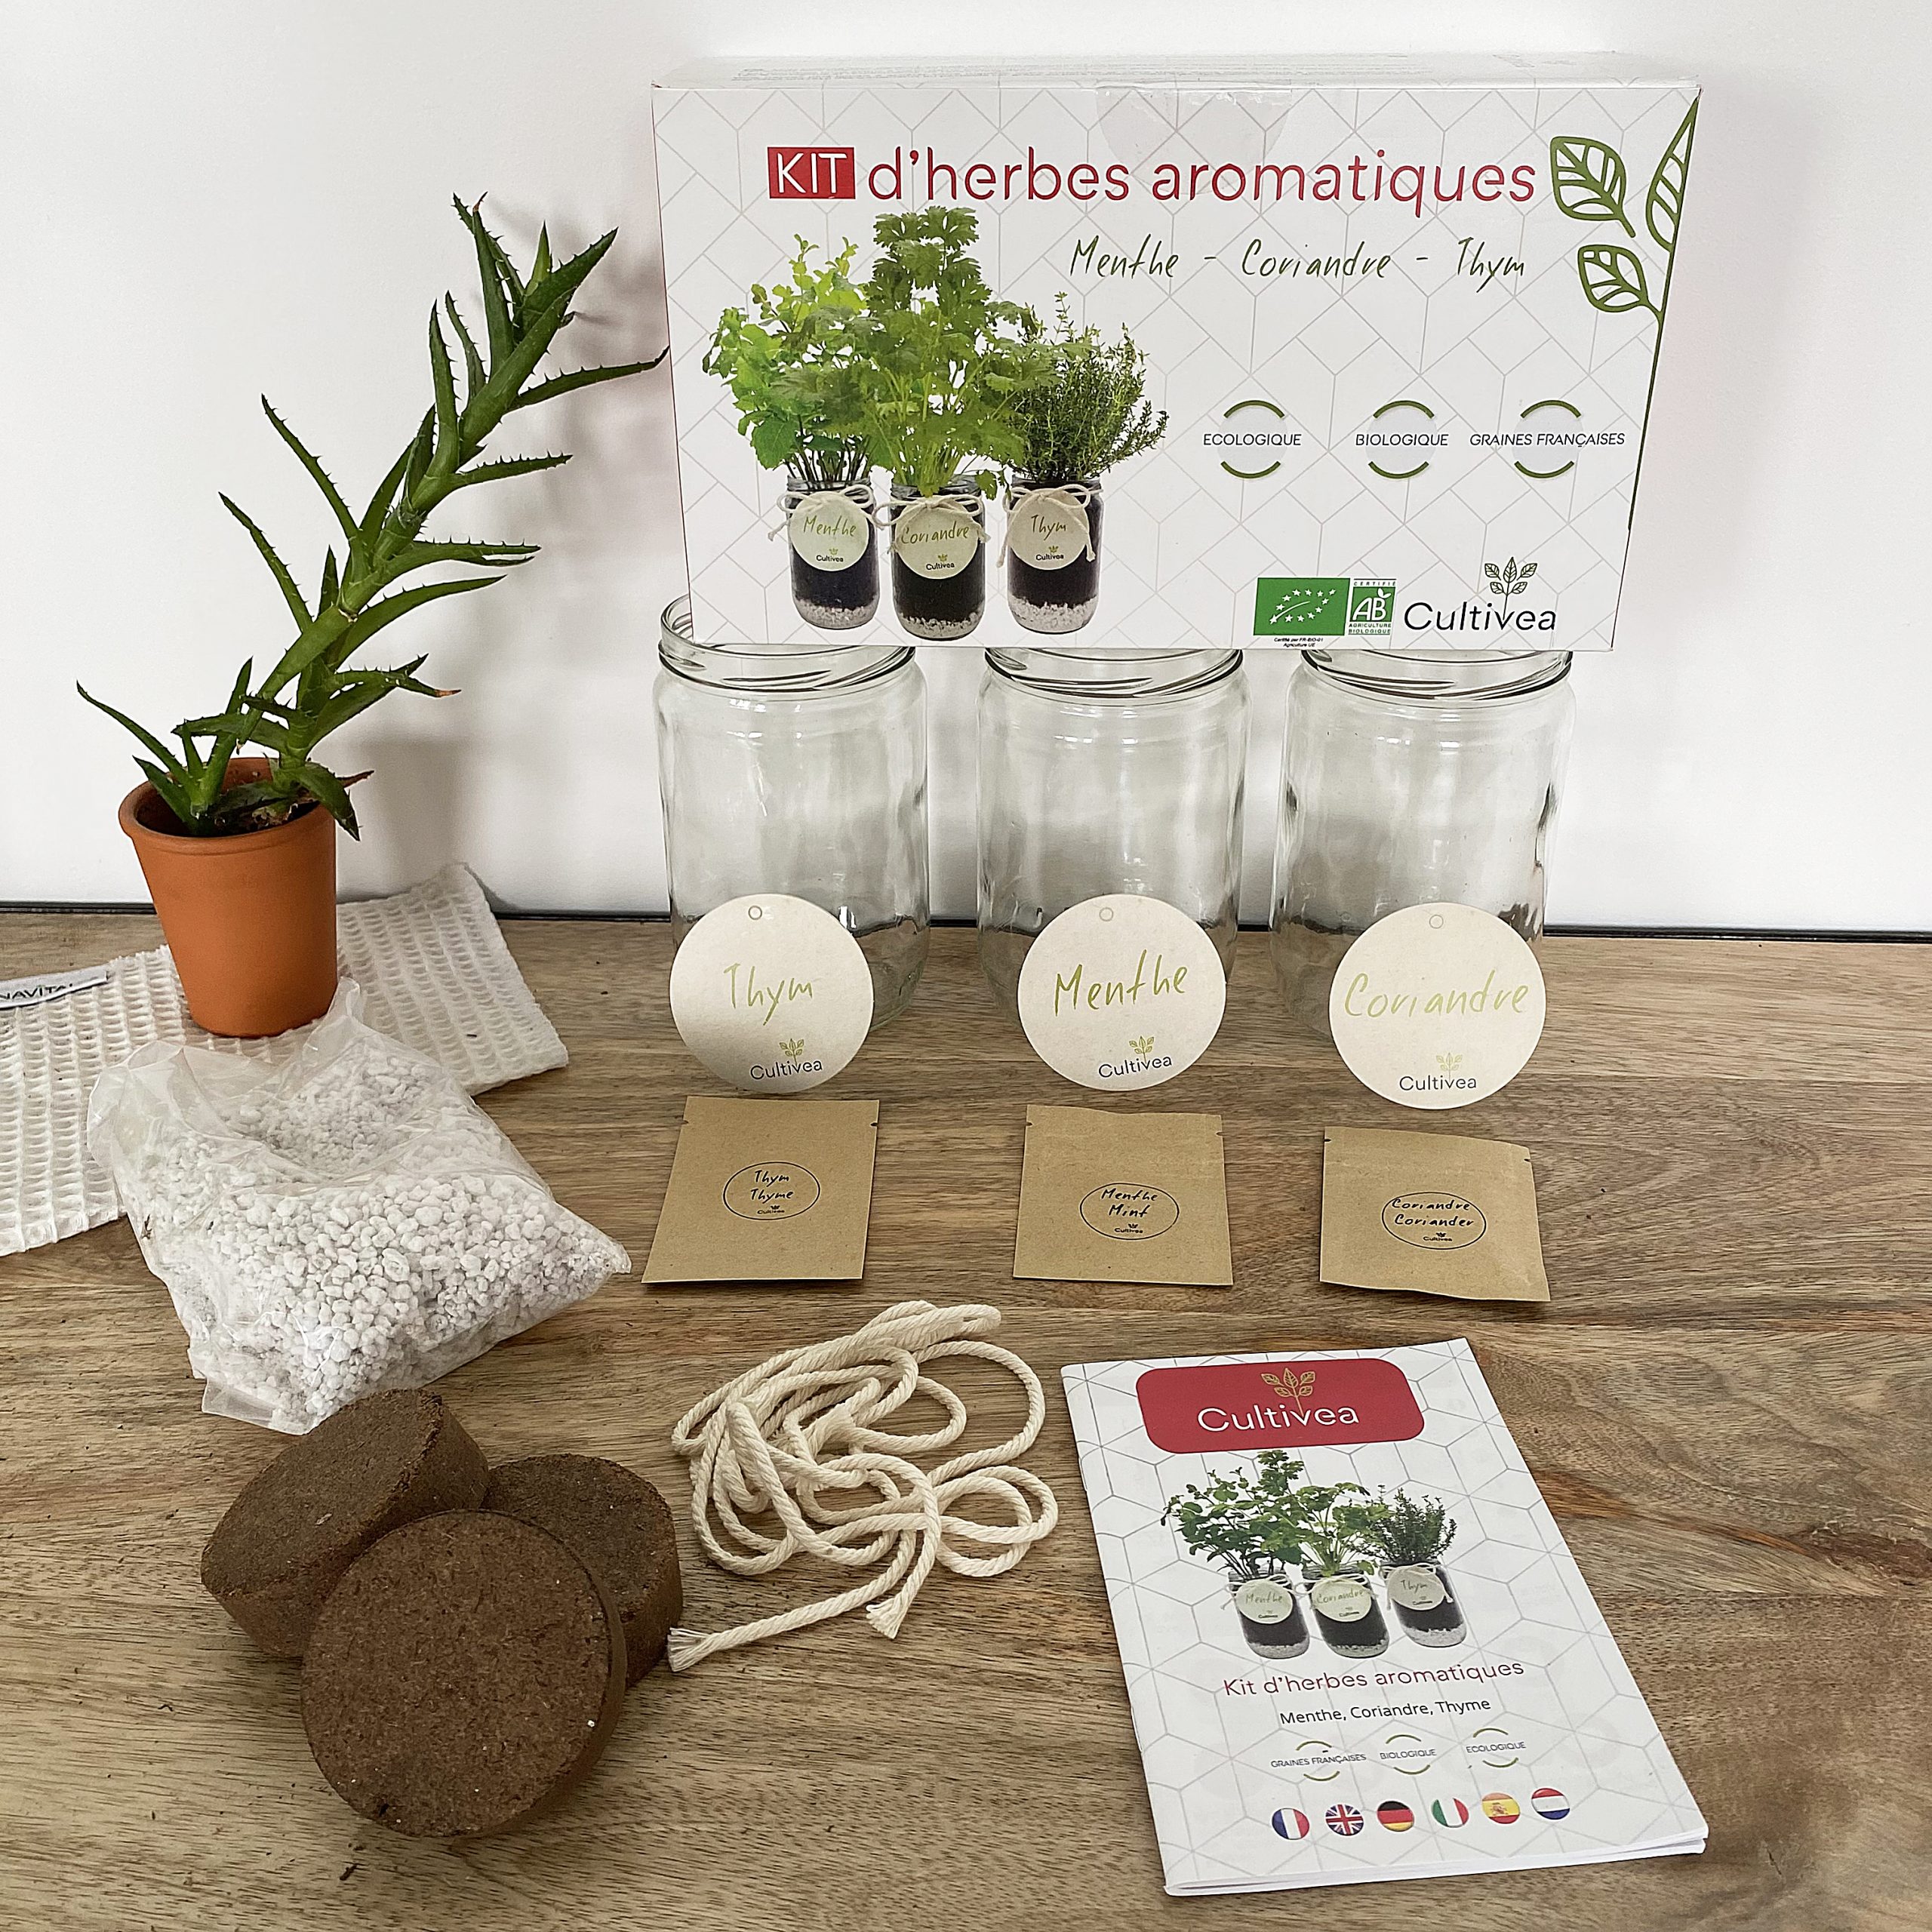 Kit d’herbes aromatiques BIO – (Menthe, Coriandre, Thym)